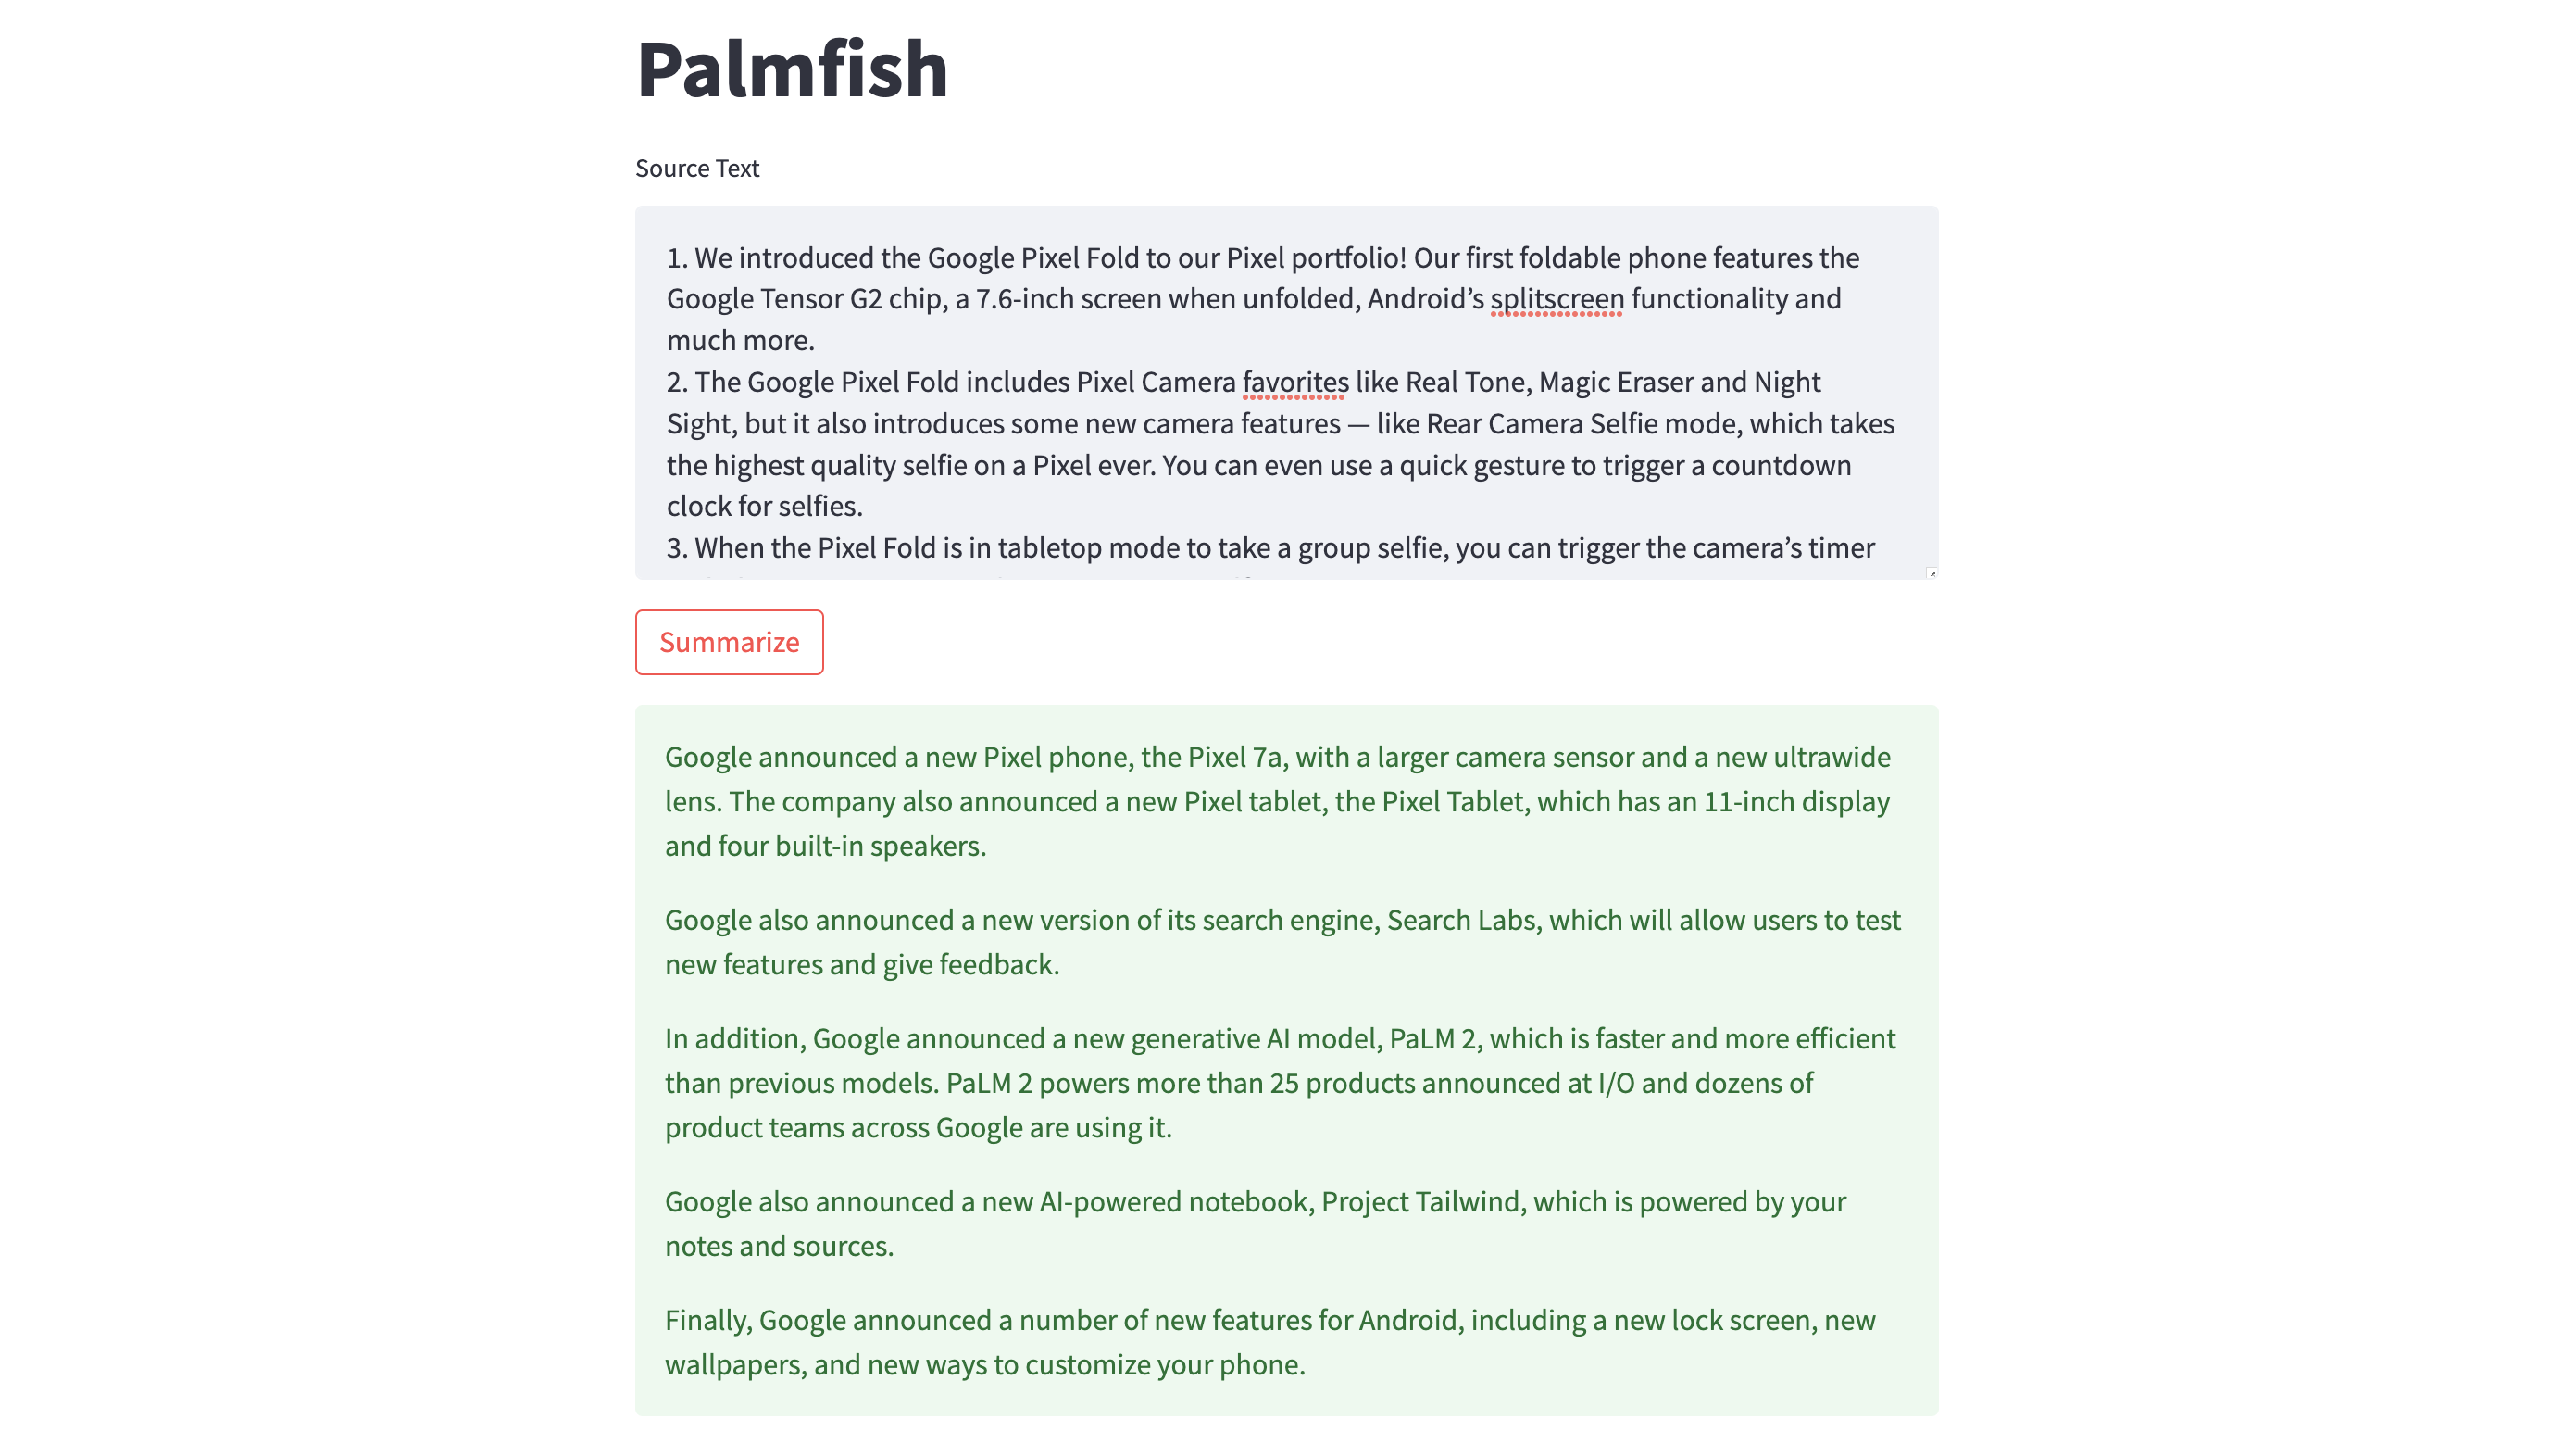 Text summarization using PaLM API